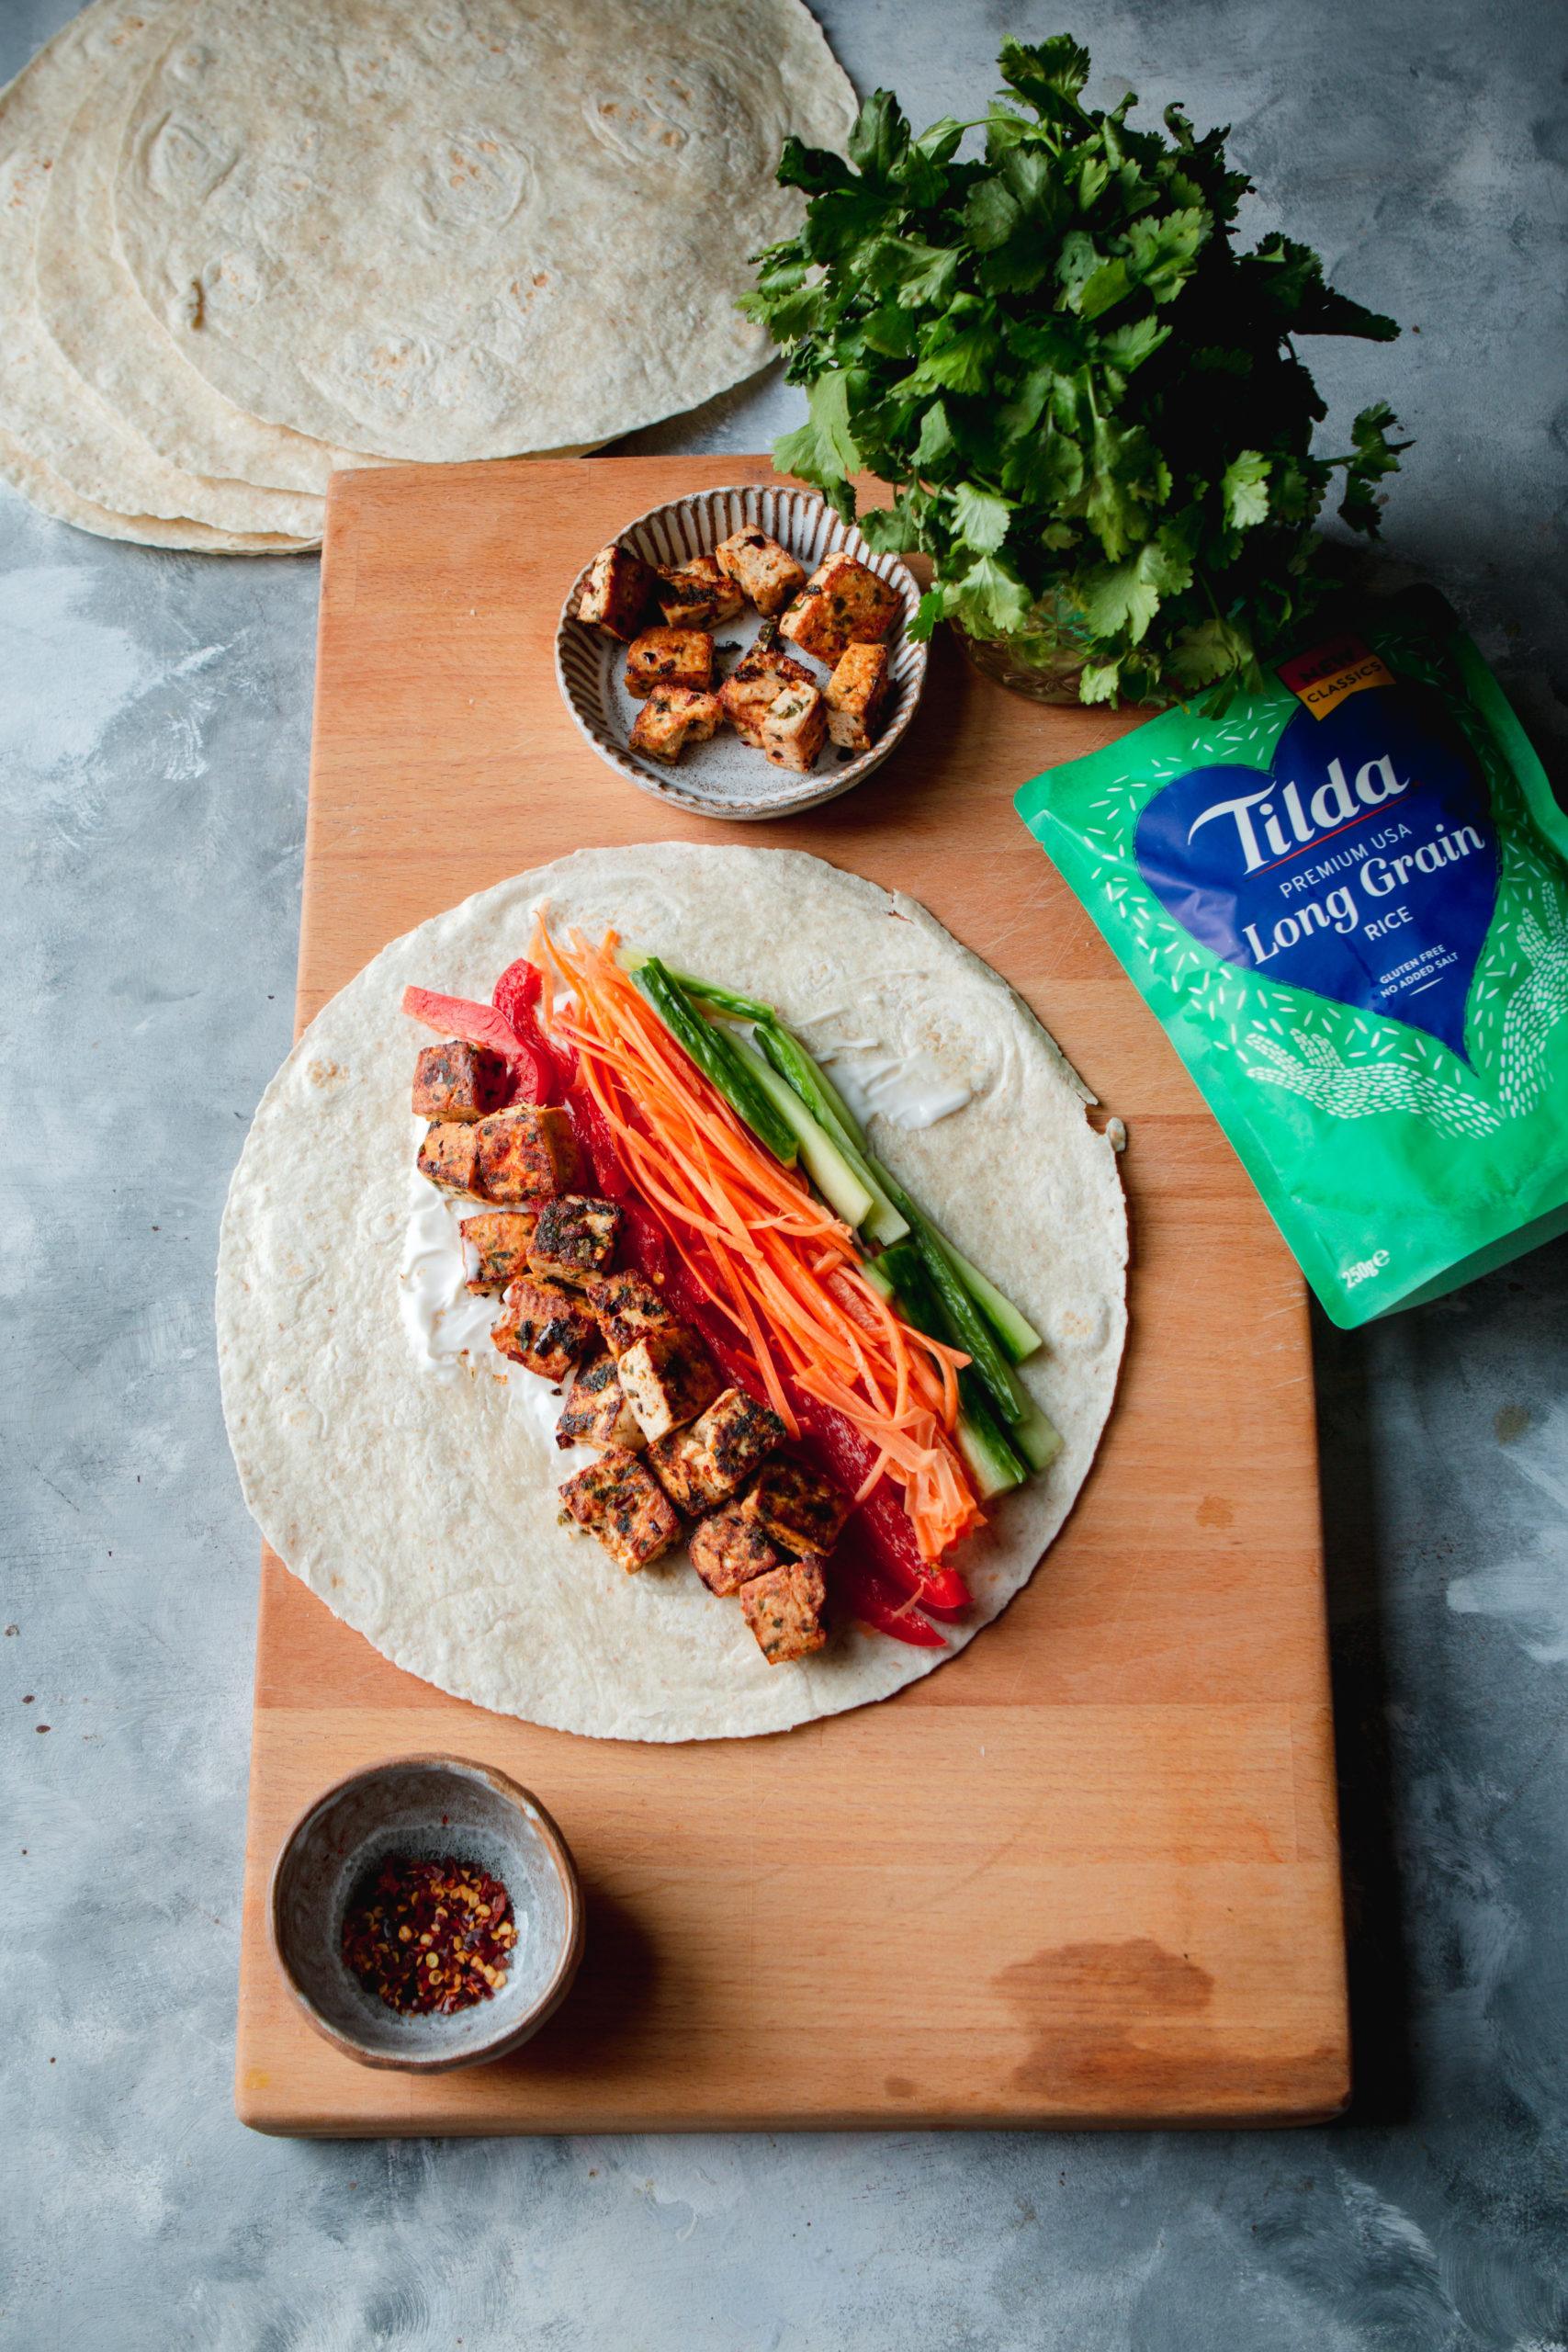 Tilda Crispy tofu burrito vegan